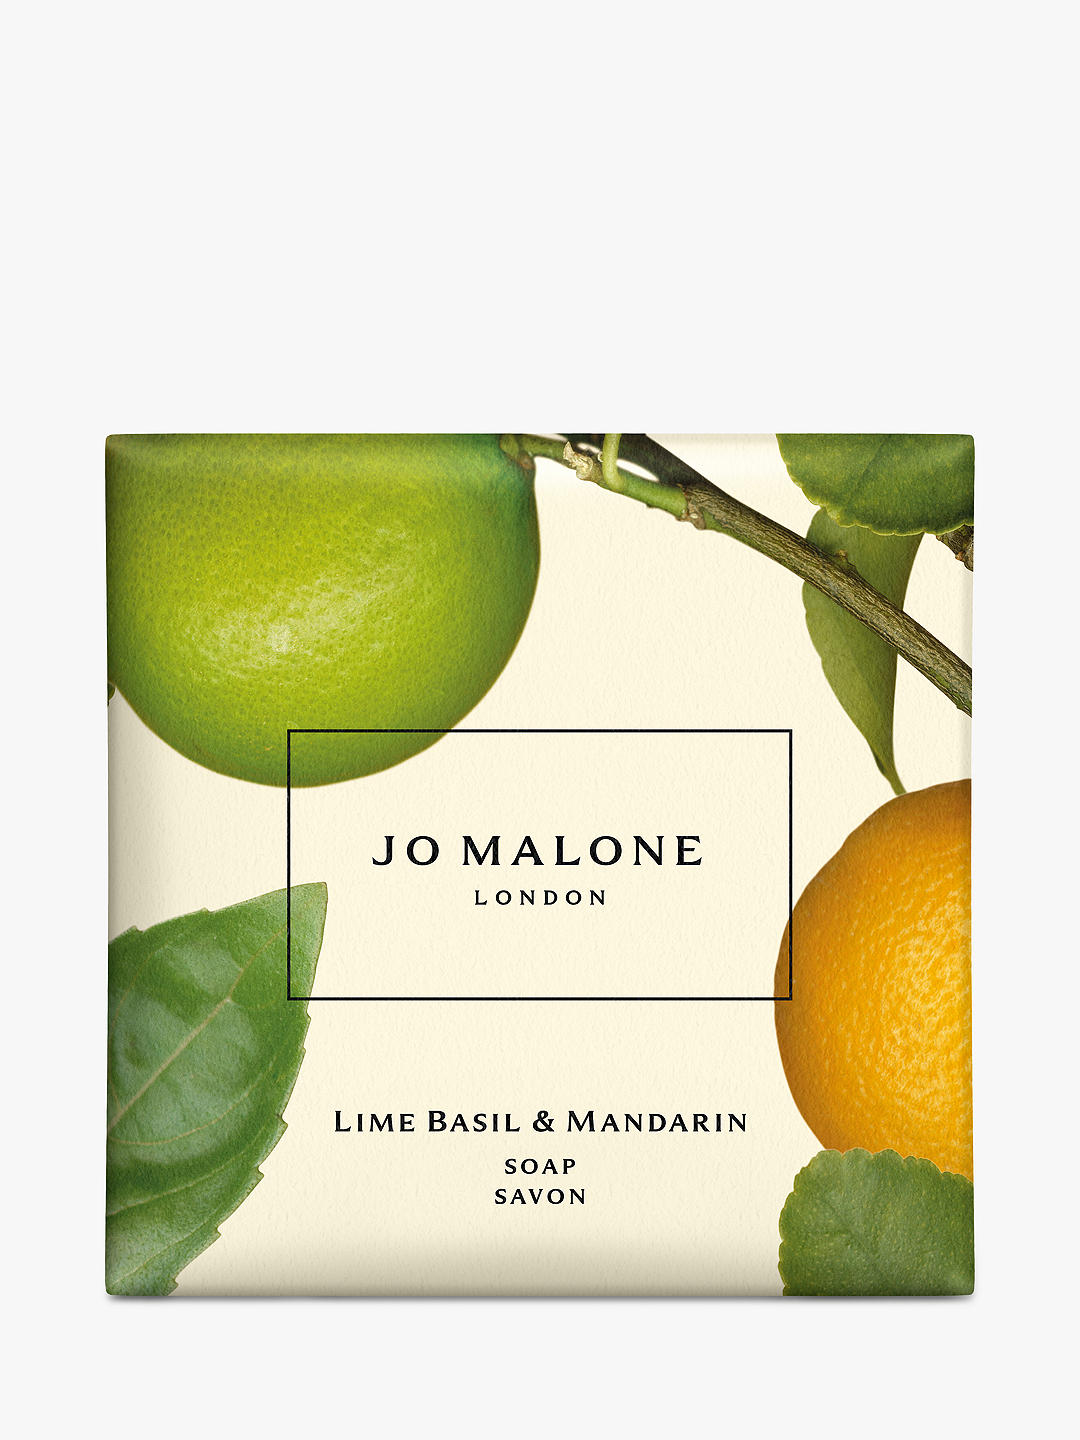 Jo Malone London Limited Edition Michael Angove Lime Basil & Mandarin Soap, 100g 1